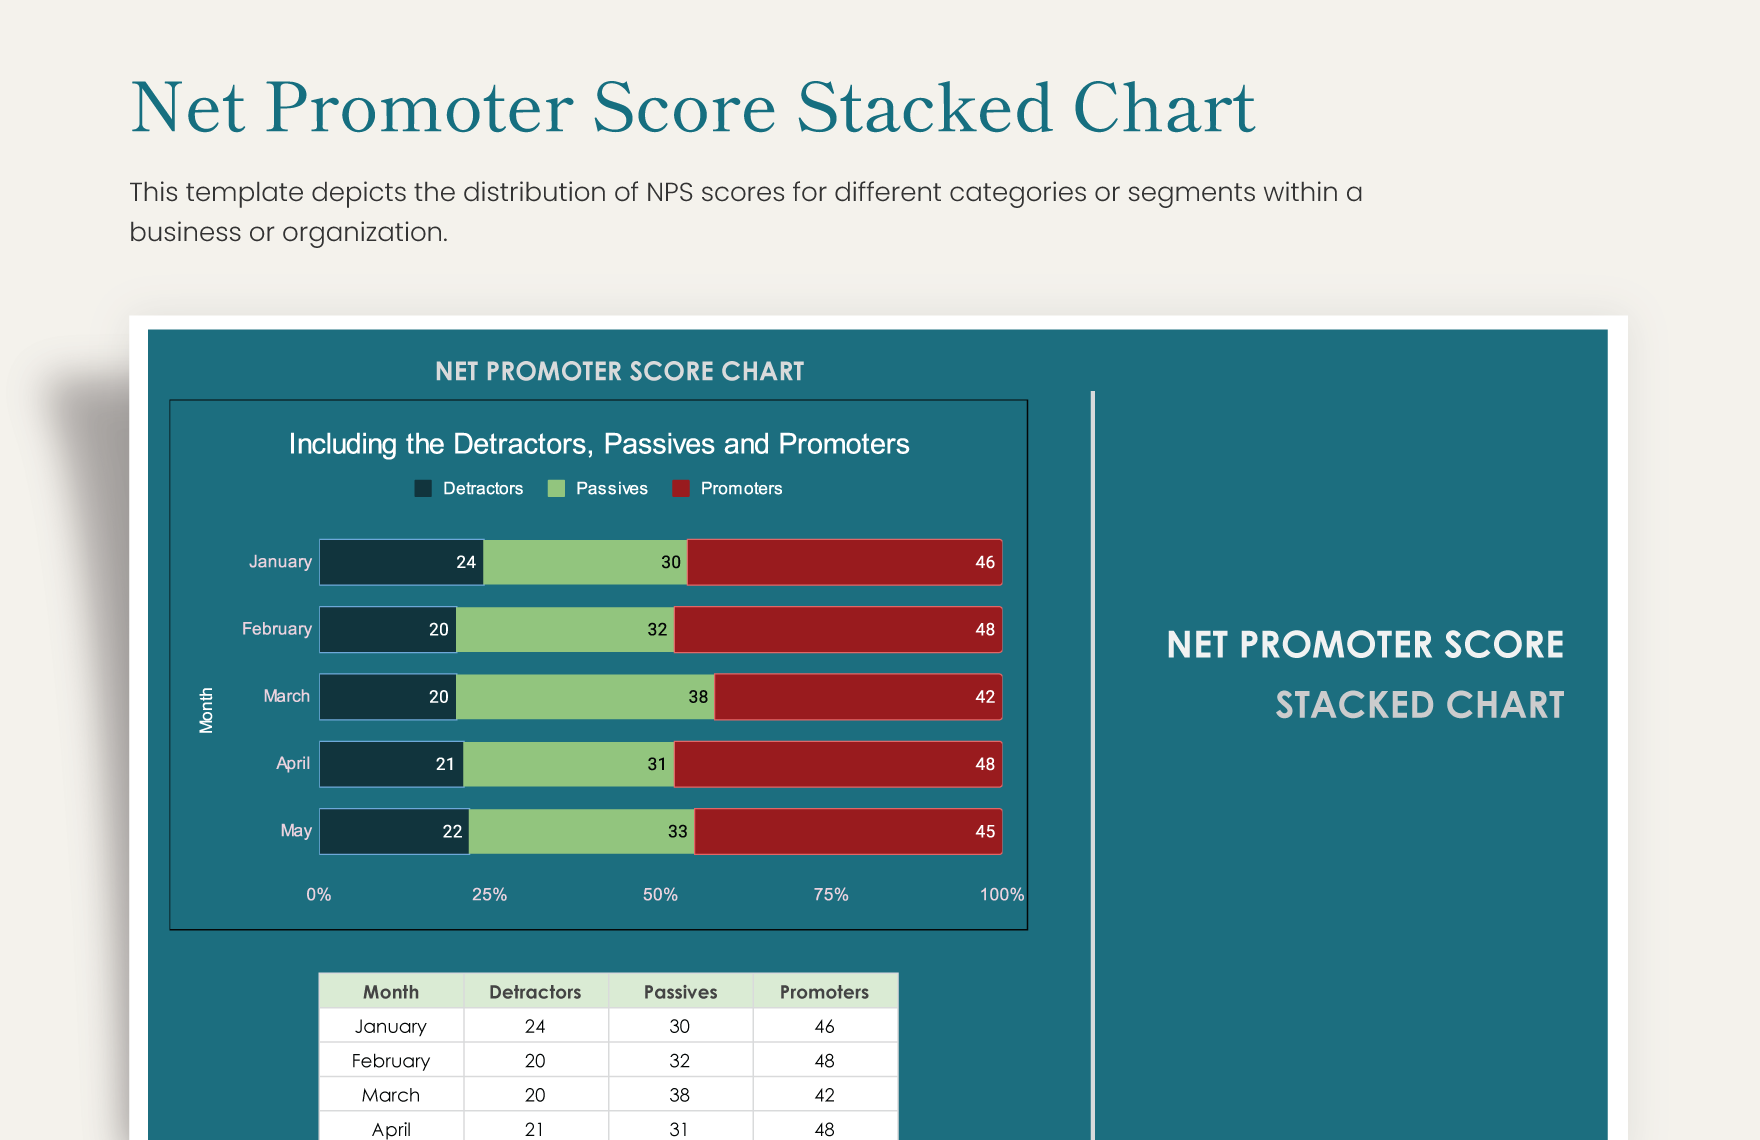 Net Promoter Score Stacked Chart